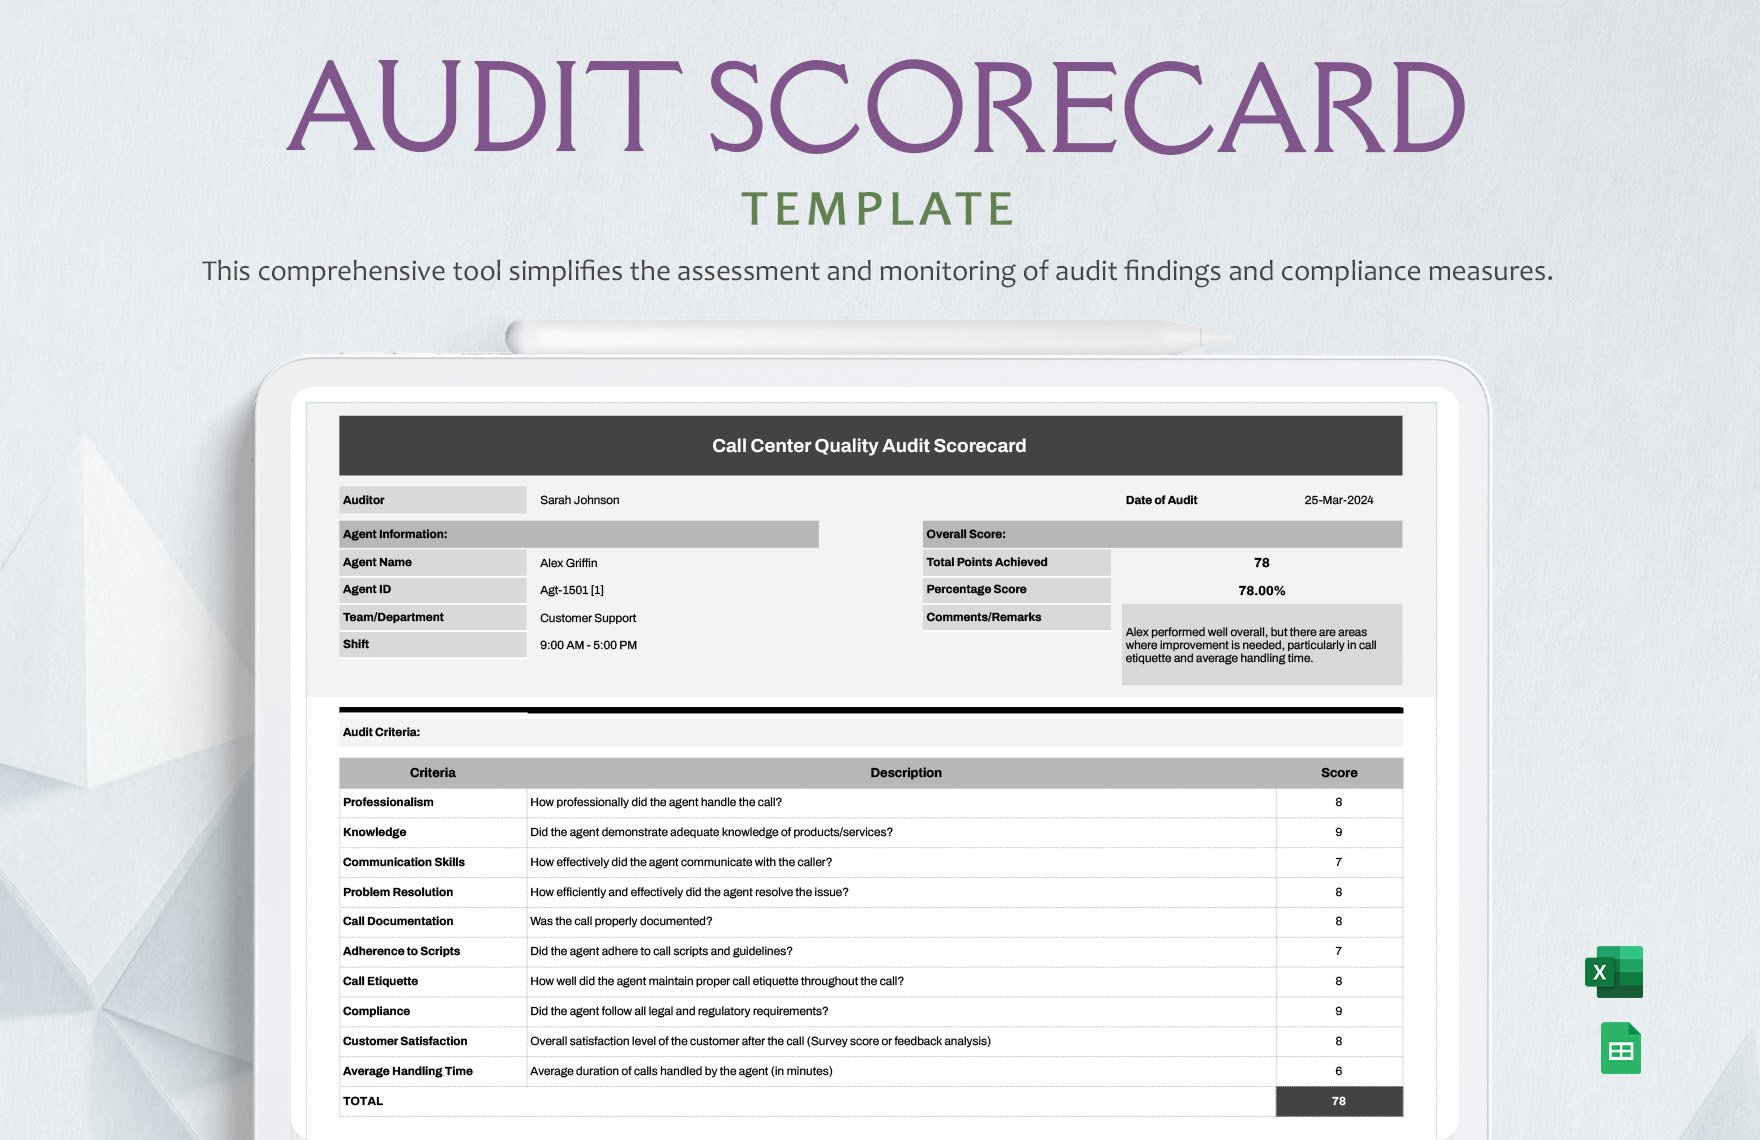 Audit Scorecard Template in Excel, Google Sheets